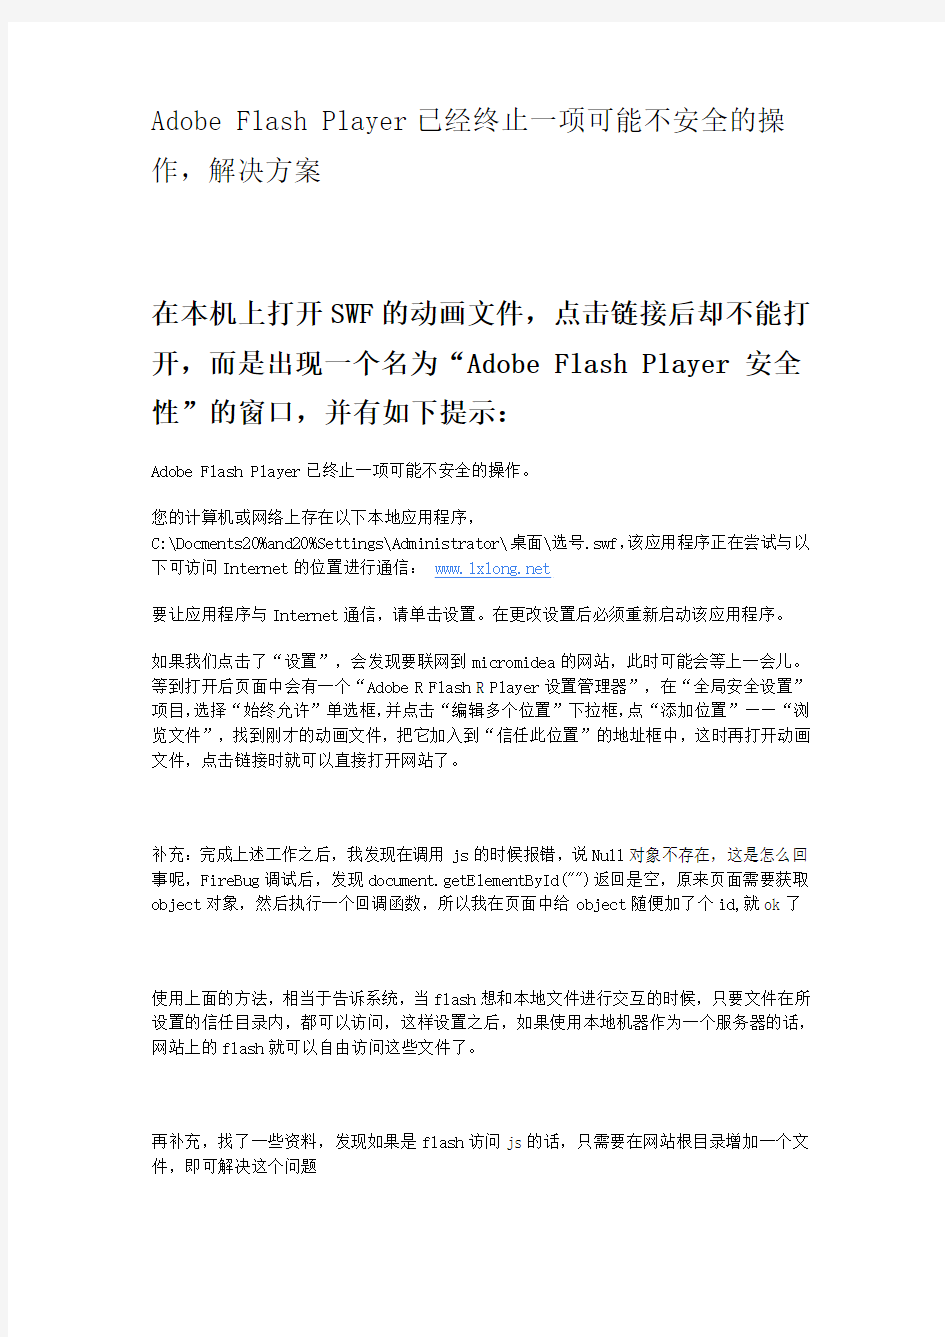 Adobe Flash Player已经终止一项可能不安全的操作,解决方案